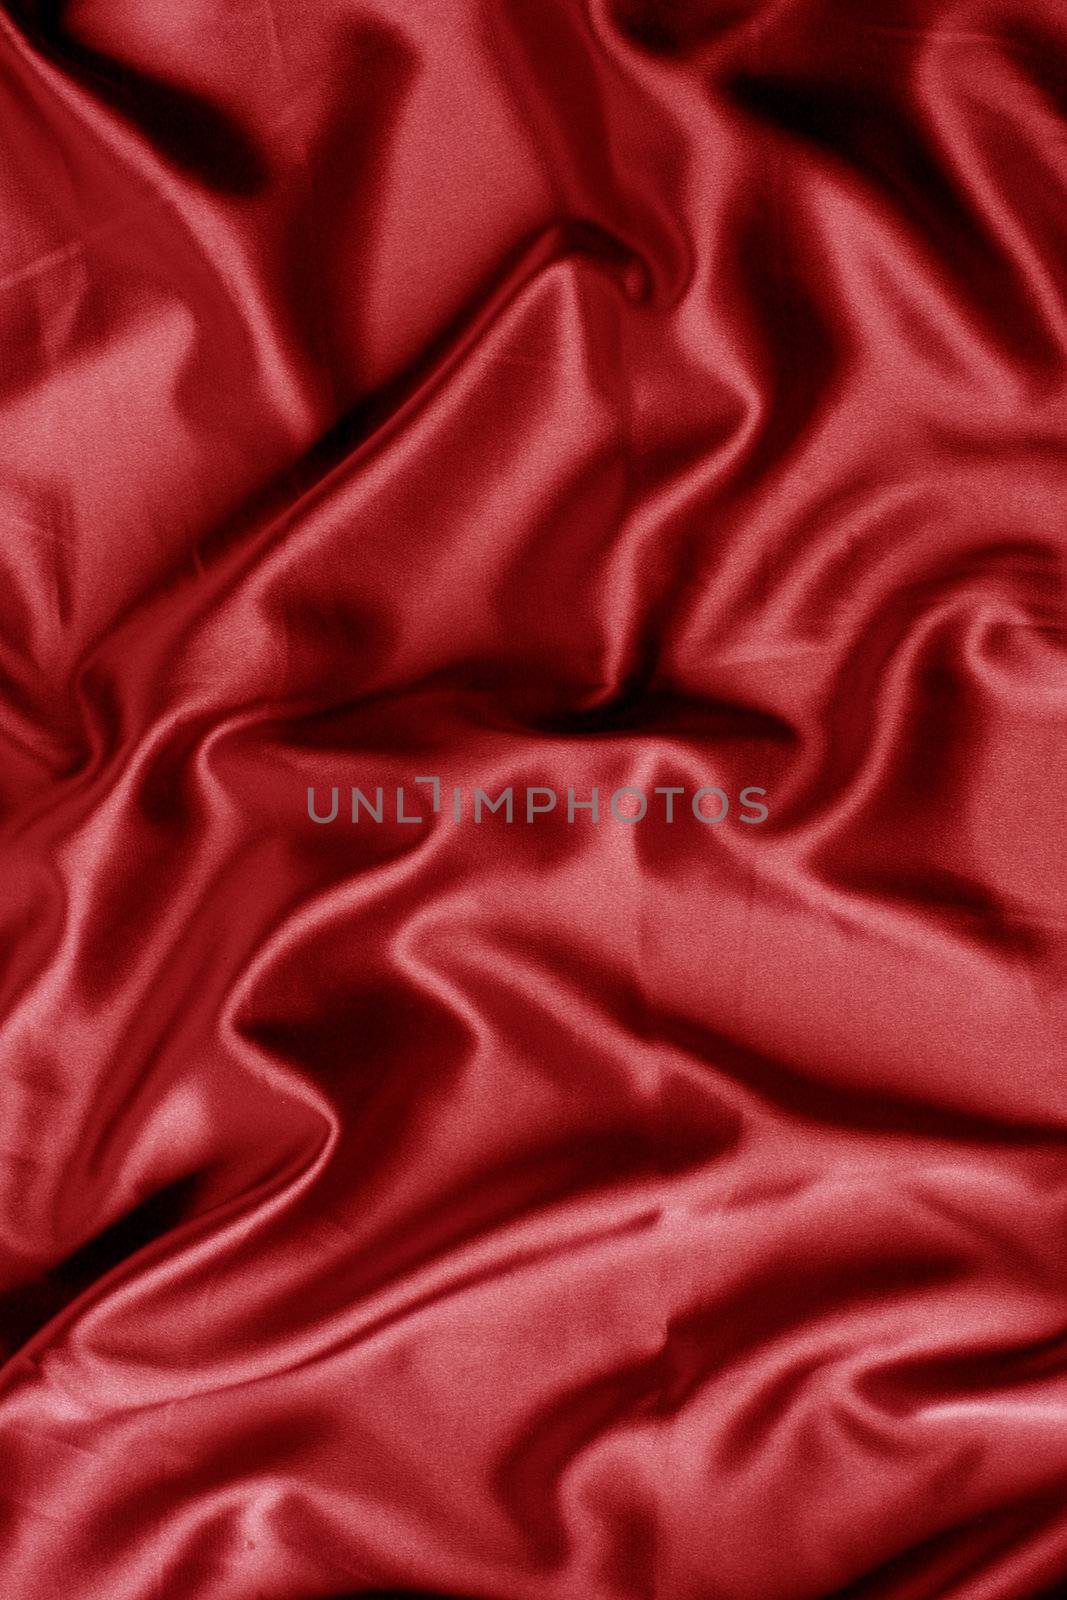 elegant red satin background by sumos